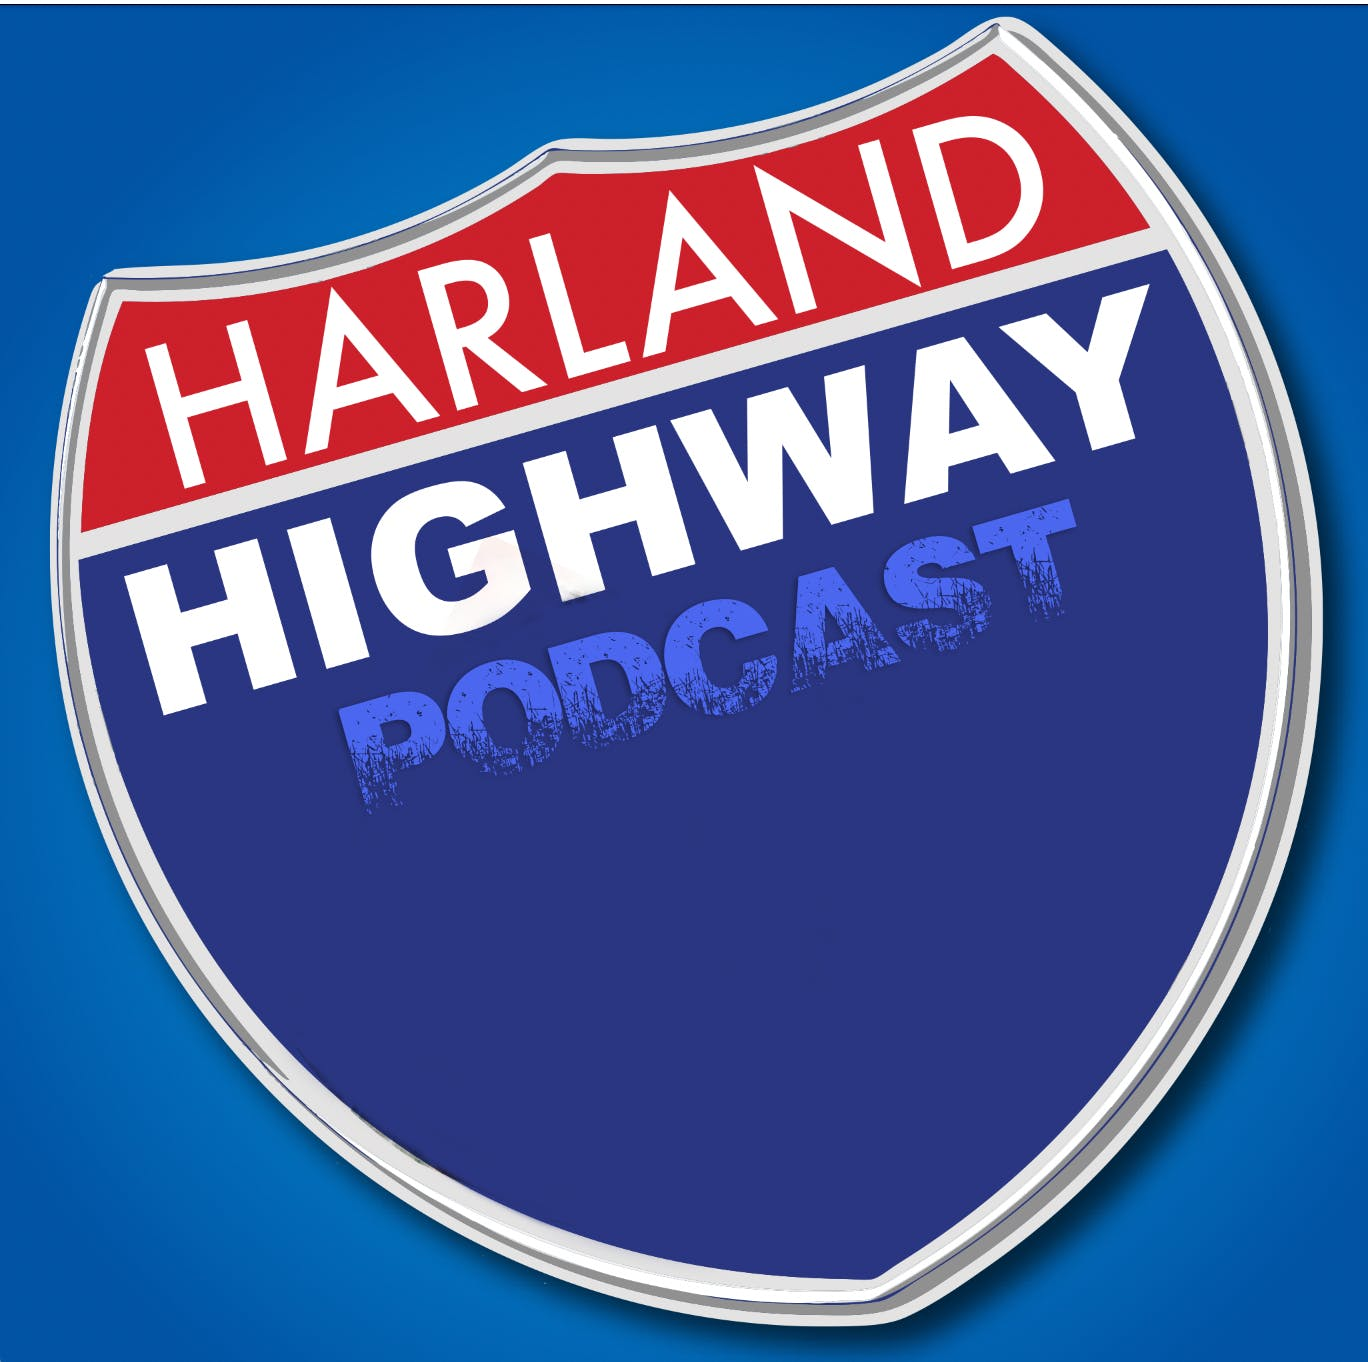 NEW HARLAND HIGHWAY #37 -HARLAND WILLIAMS, Christmas episode.